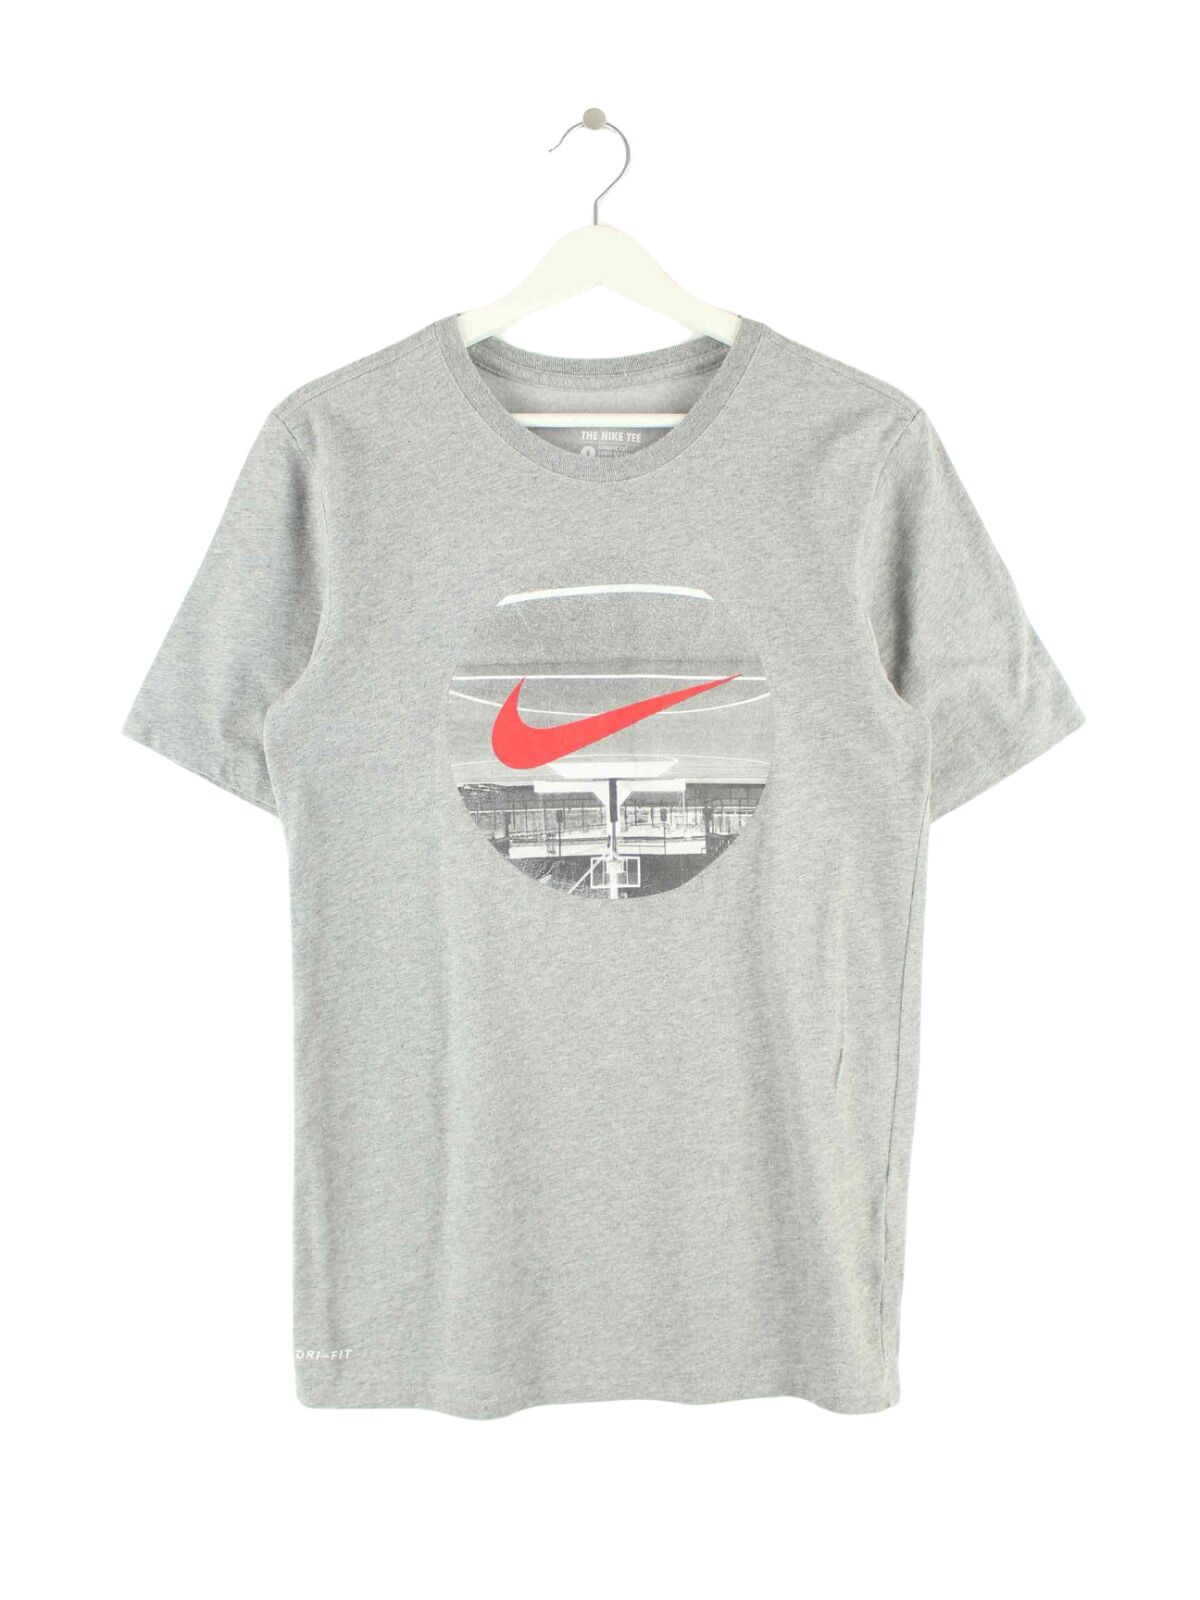 Nike Basketball Print T-Shirt Grau S (front image)